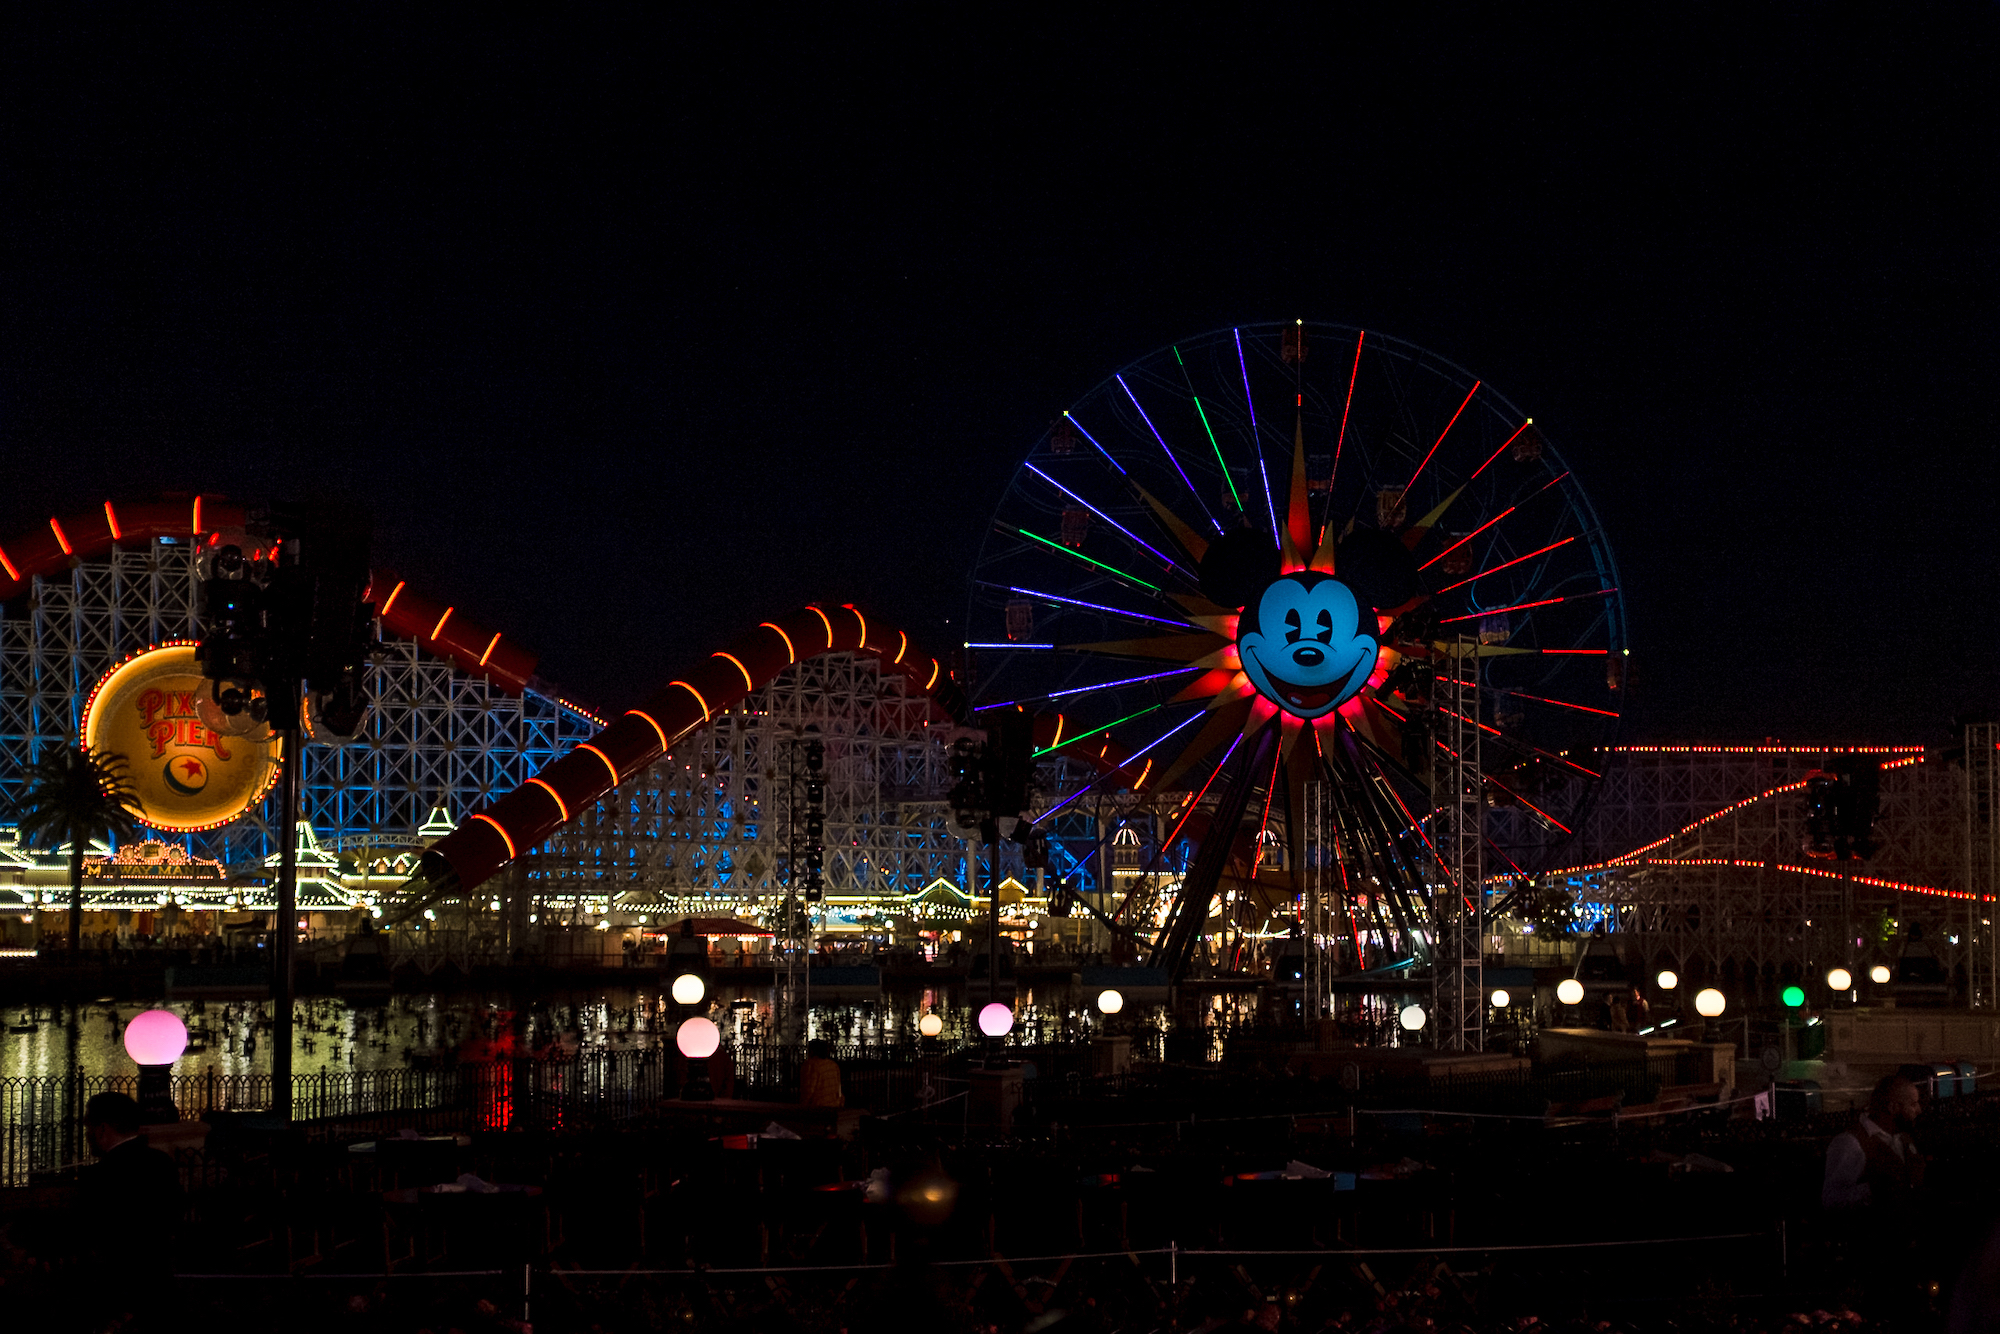 Disneyland California Adventure at night